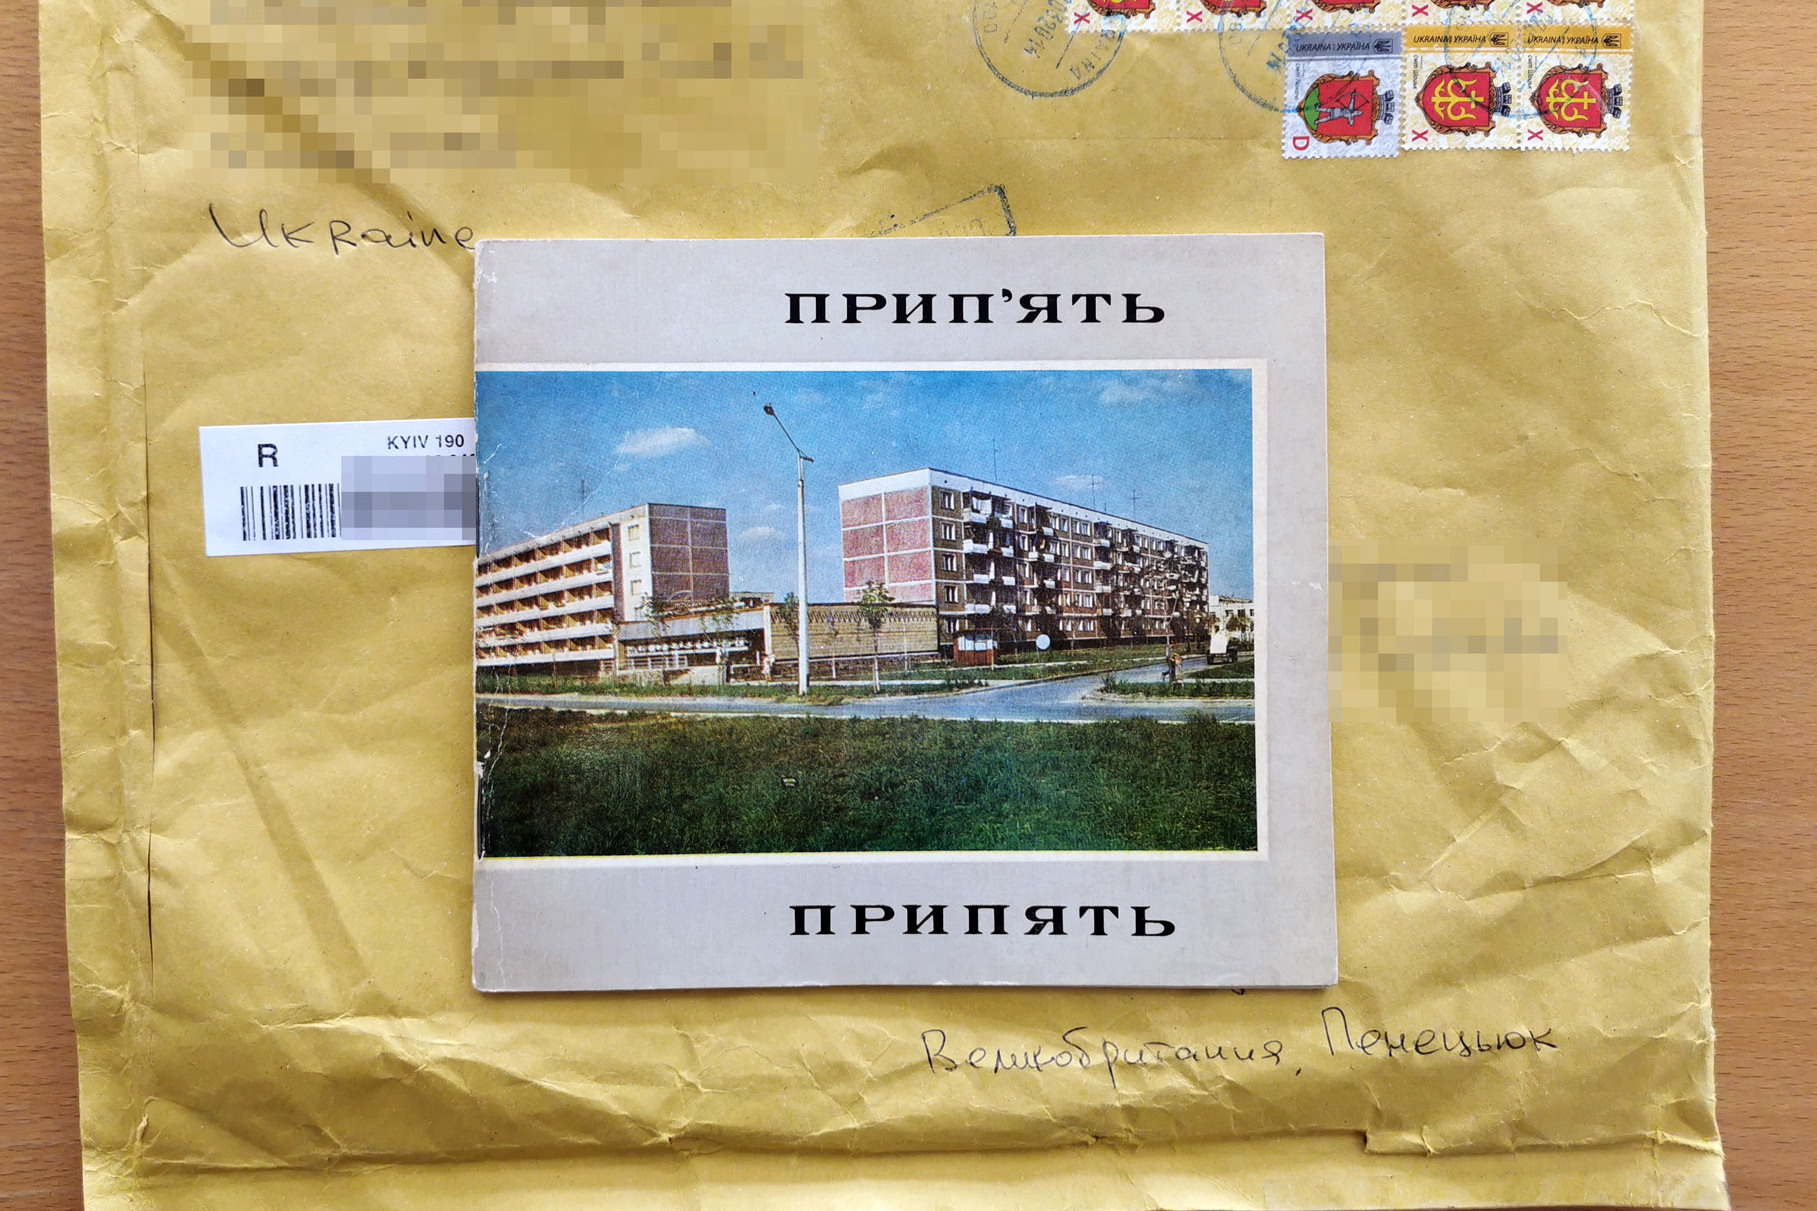 1976 Pripyat Photo Album (English translation)